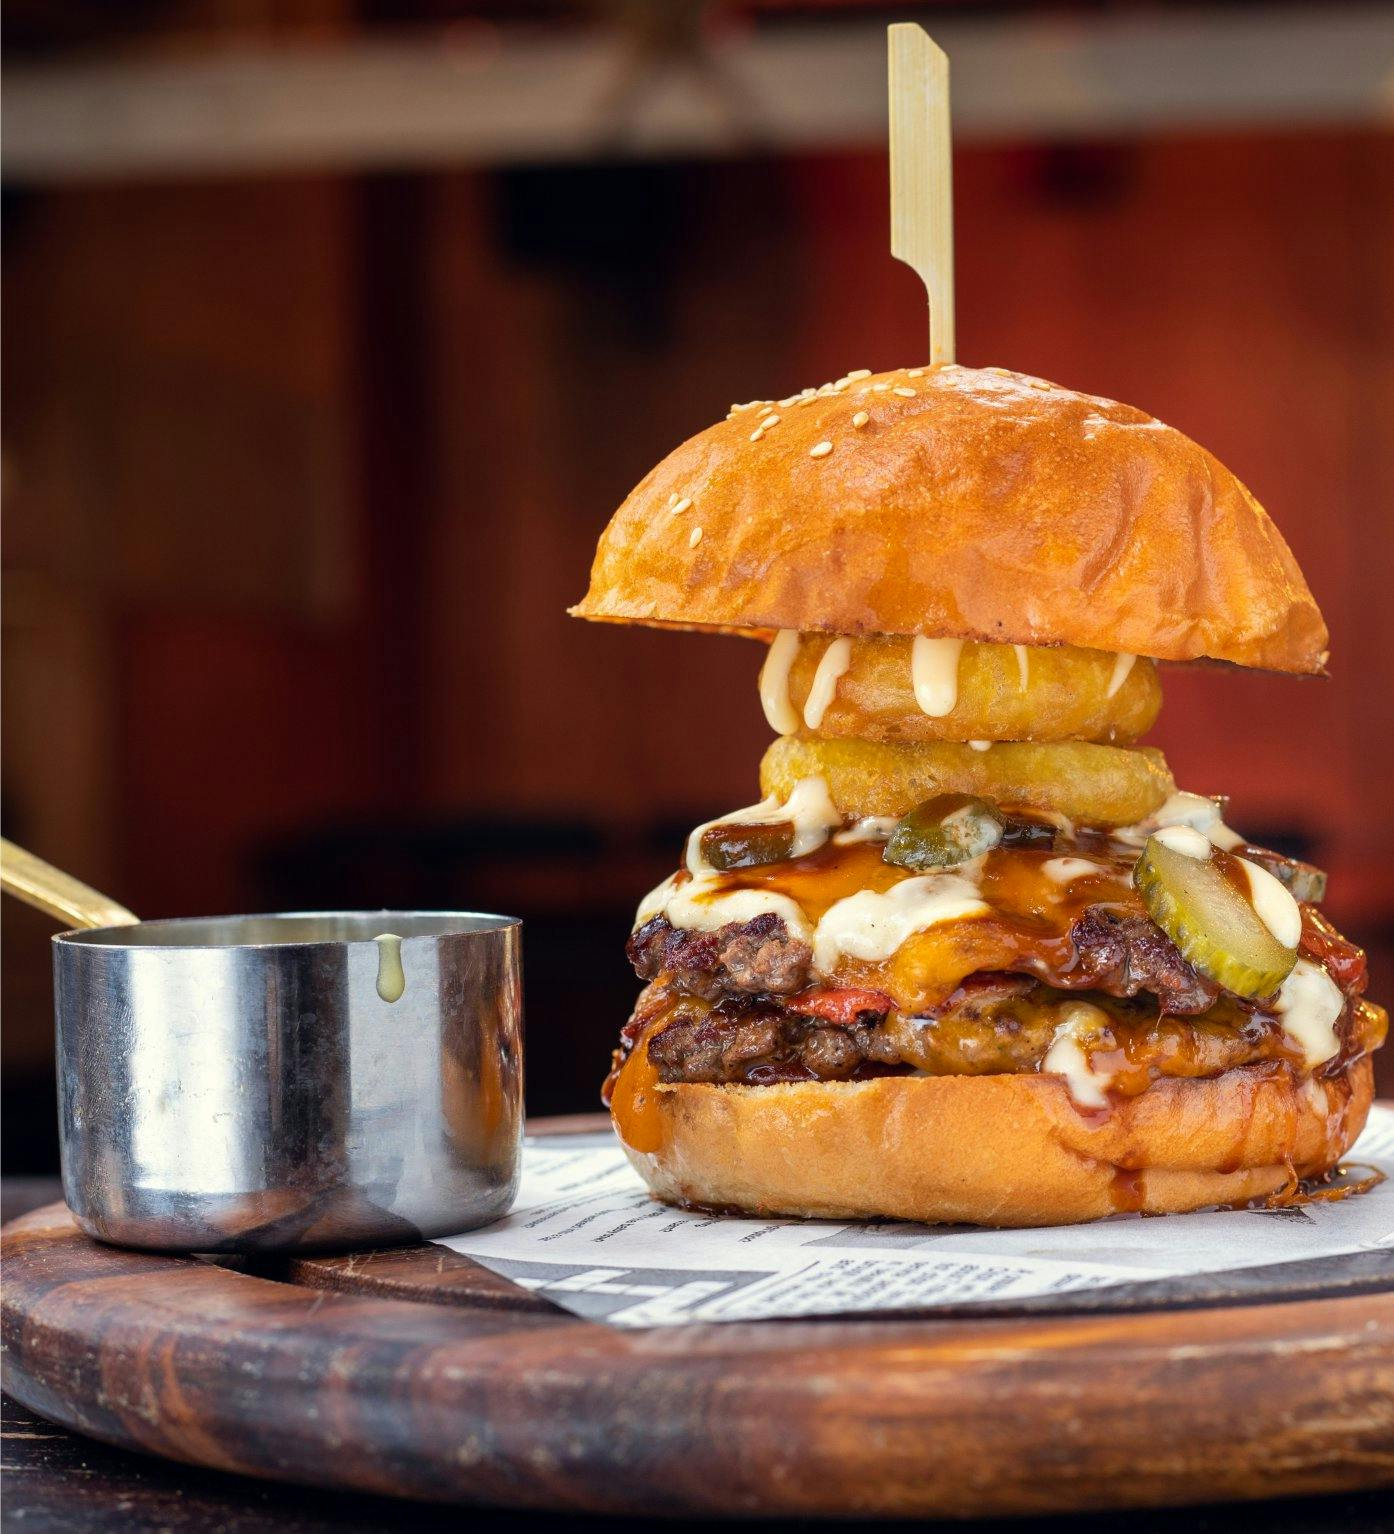 The BBKang burger - Voted Queenstown's best burger